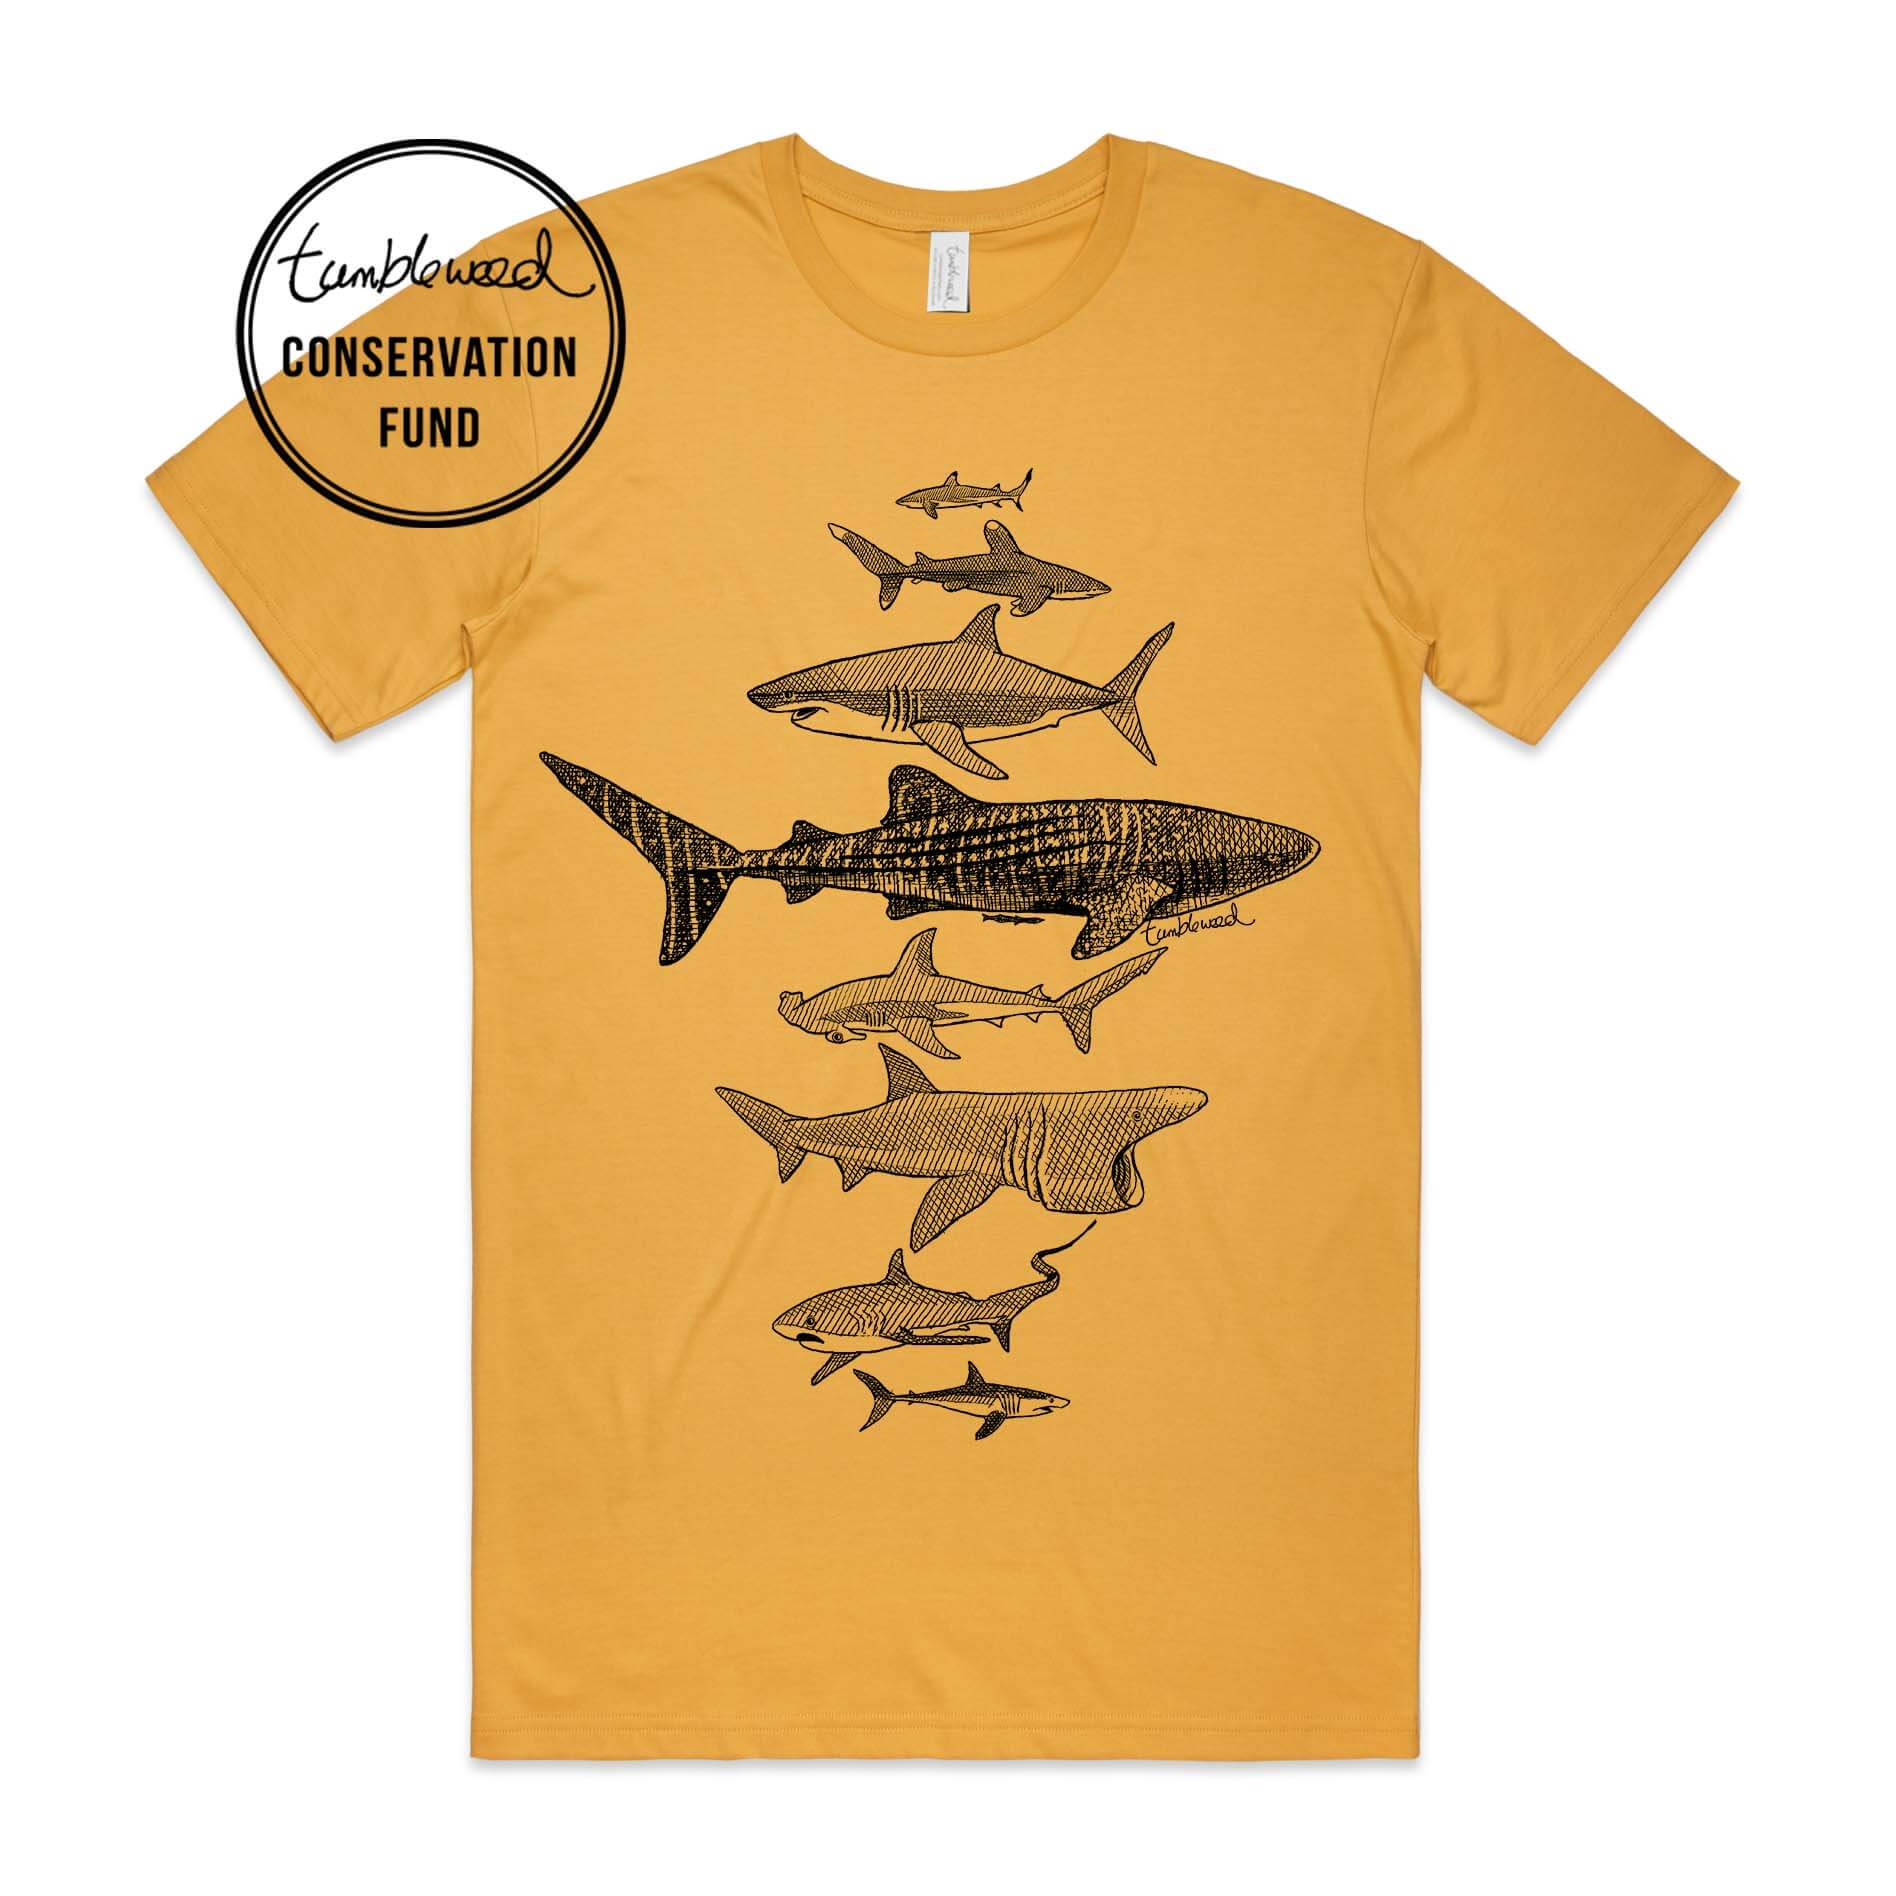 Mustard, female t-shirt featuring a screen printed Sharks design.